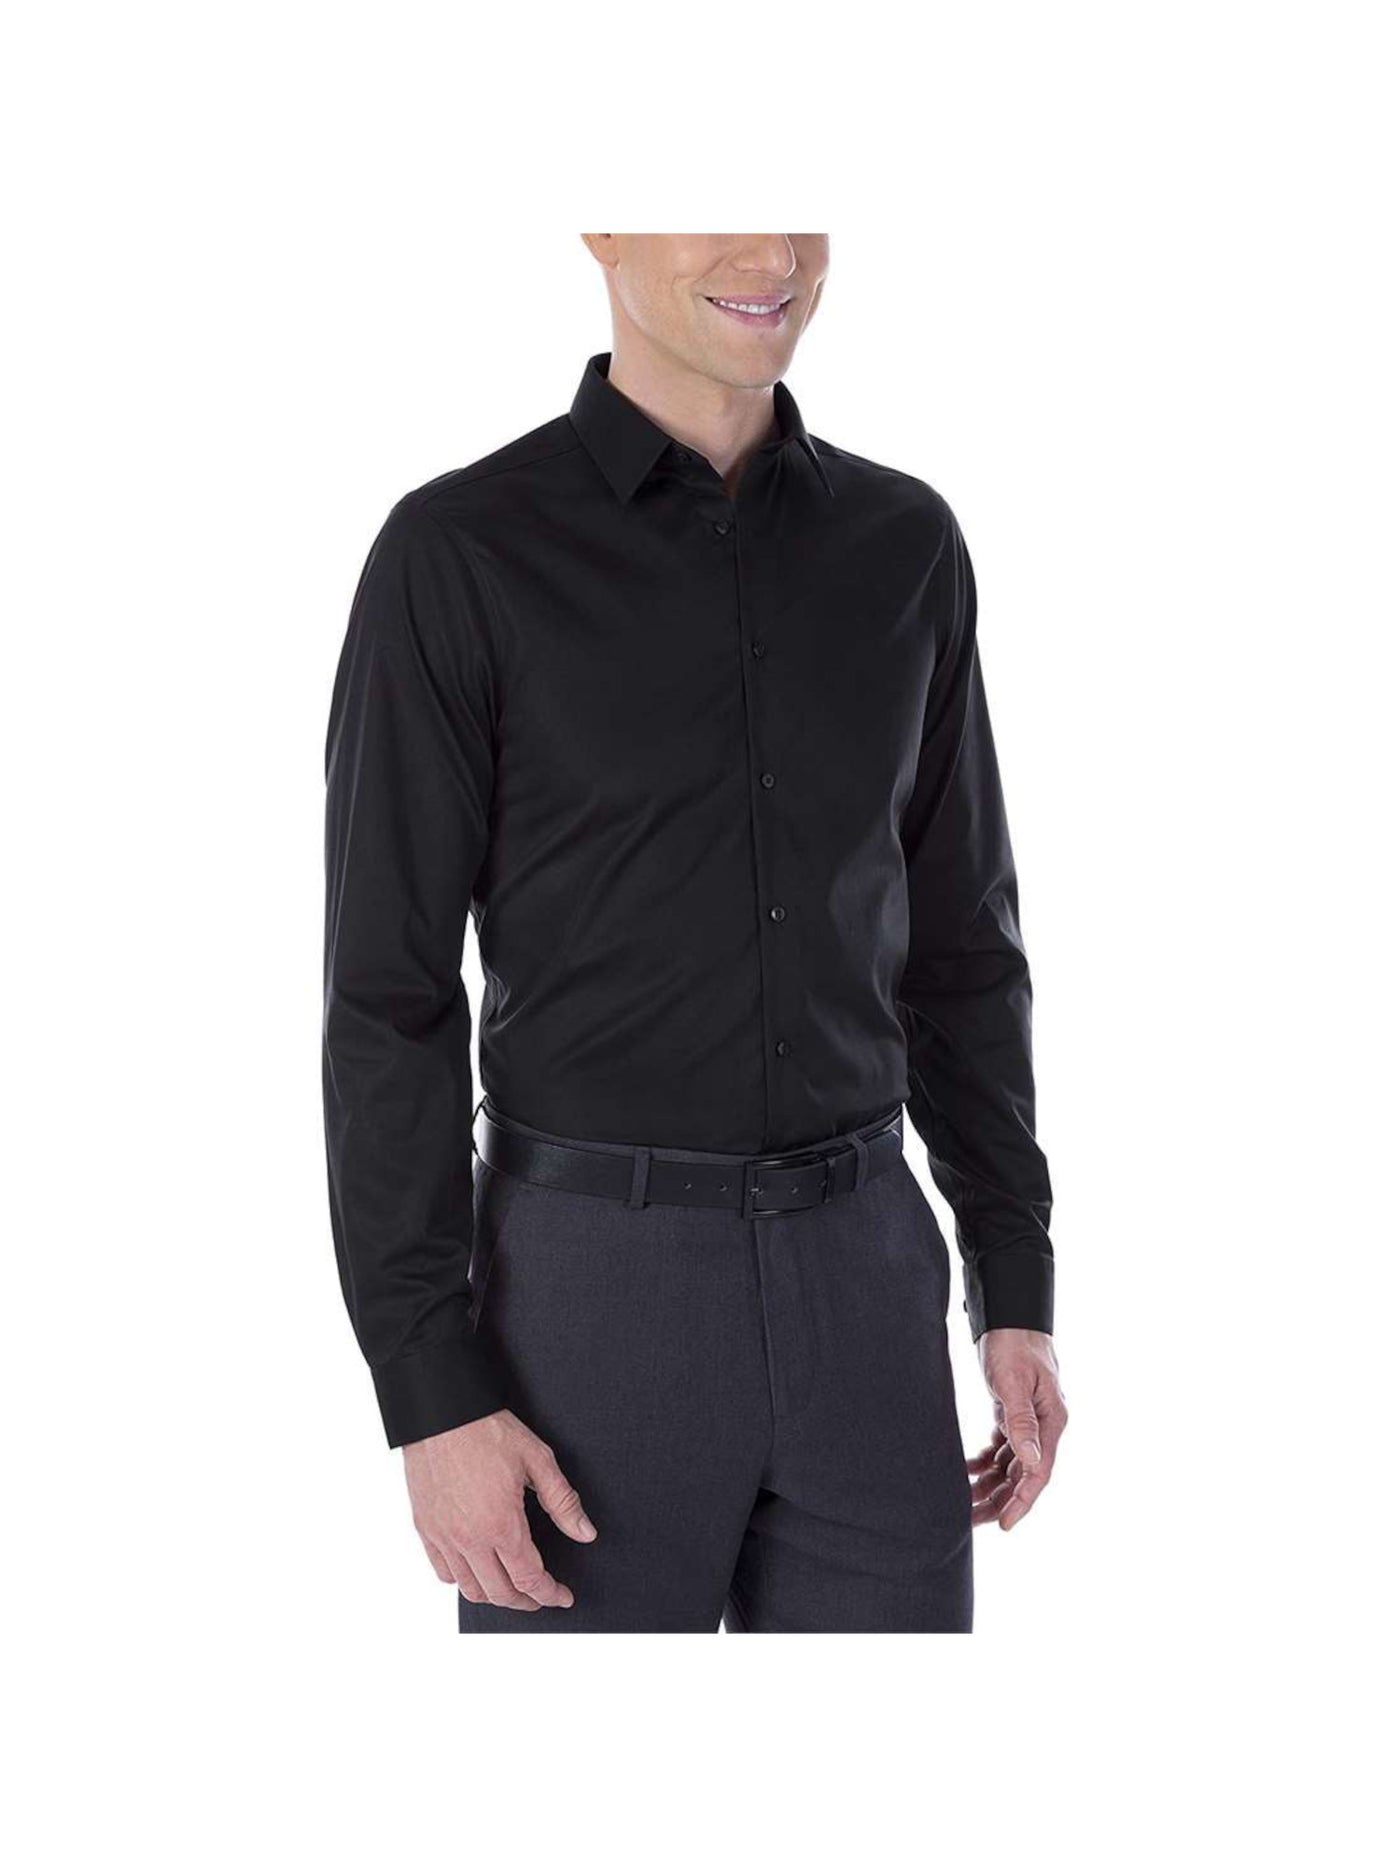 CALVIN KLEIN Mens Black Spread Collar Slim Fit Button Down Shirt XL 17.5- 32/33